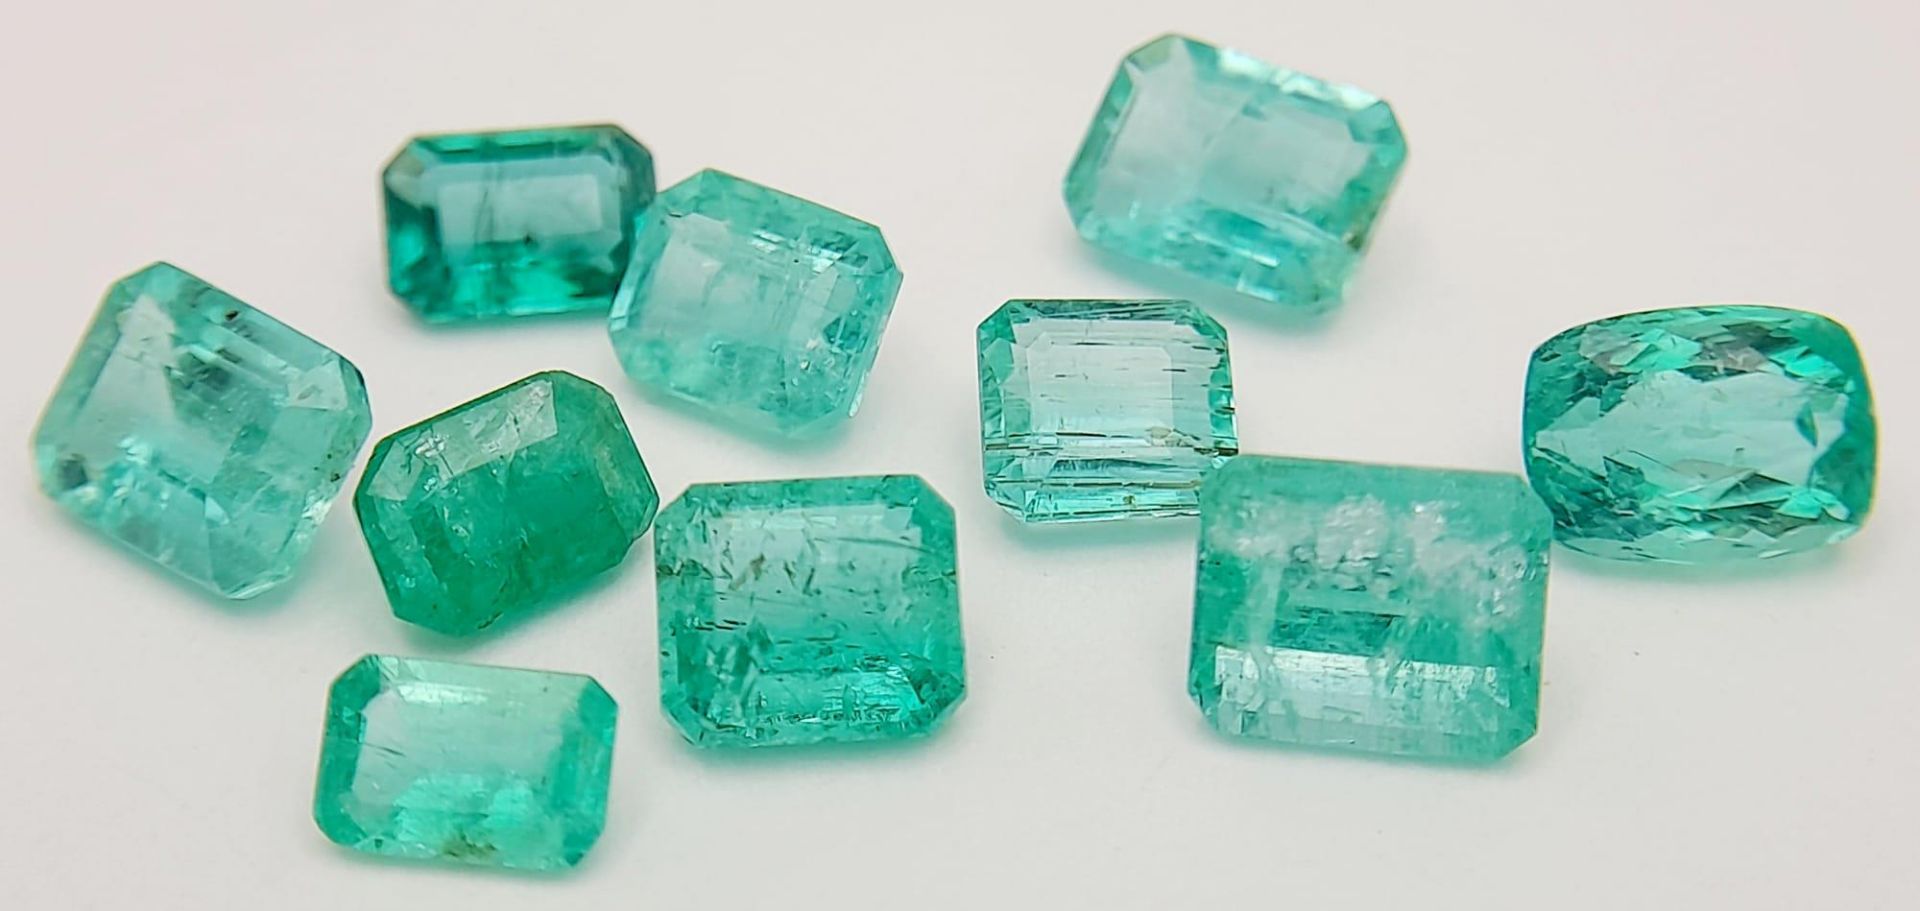 7.79ct Zambian Emeralds Gemstone Lot. Fine Quality Gemstones, Translucent. ref: ZK 001